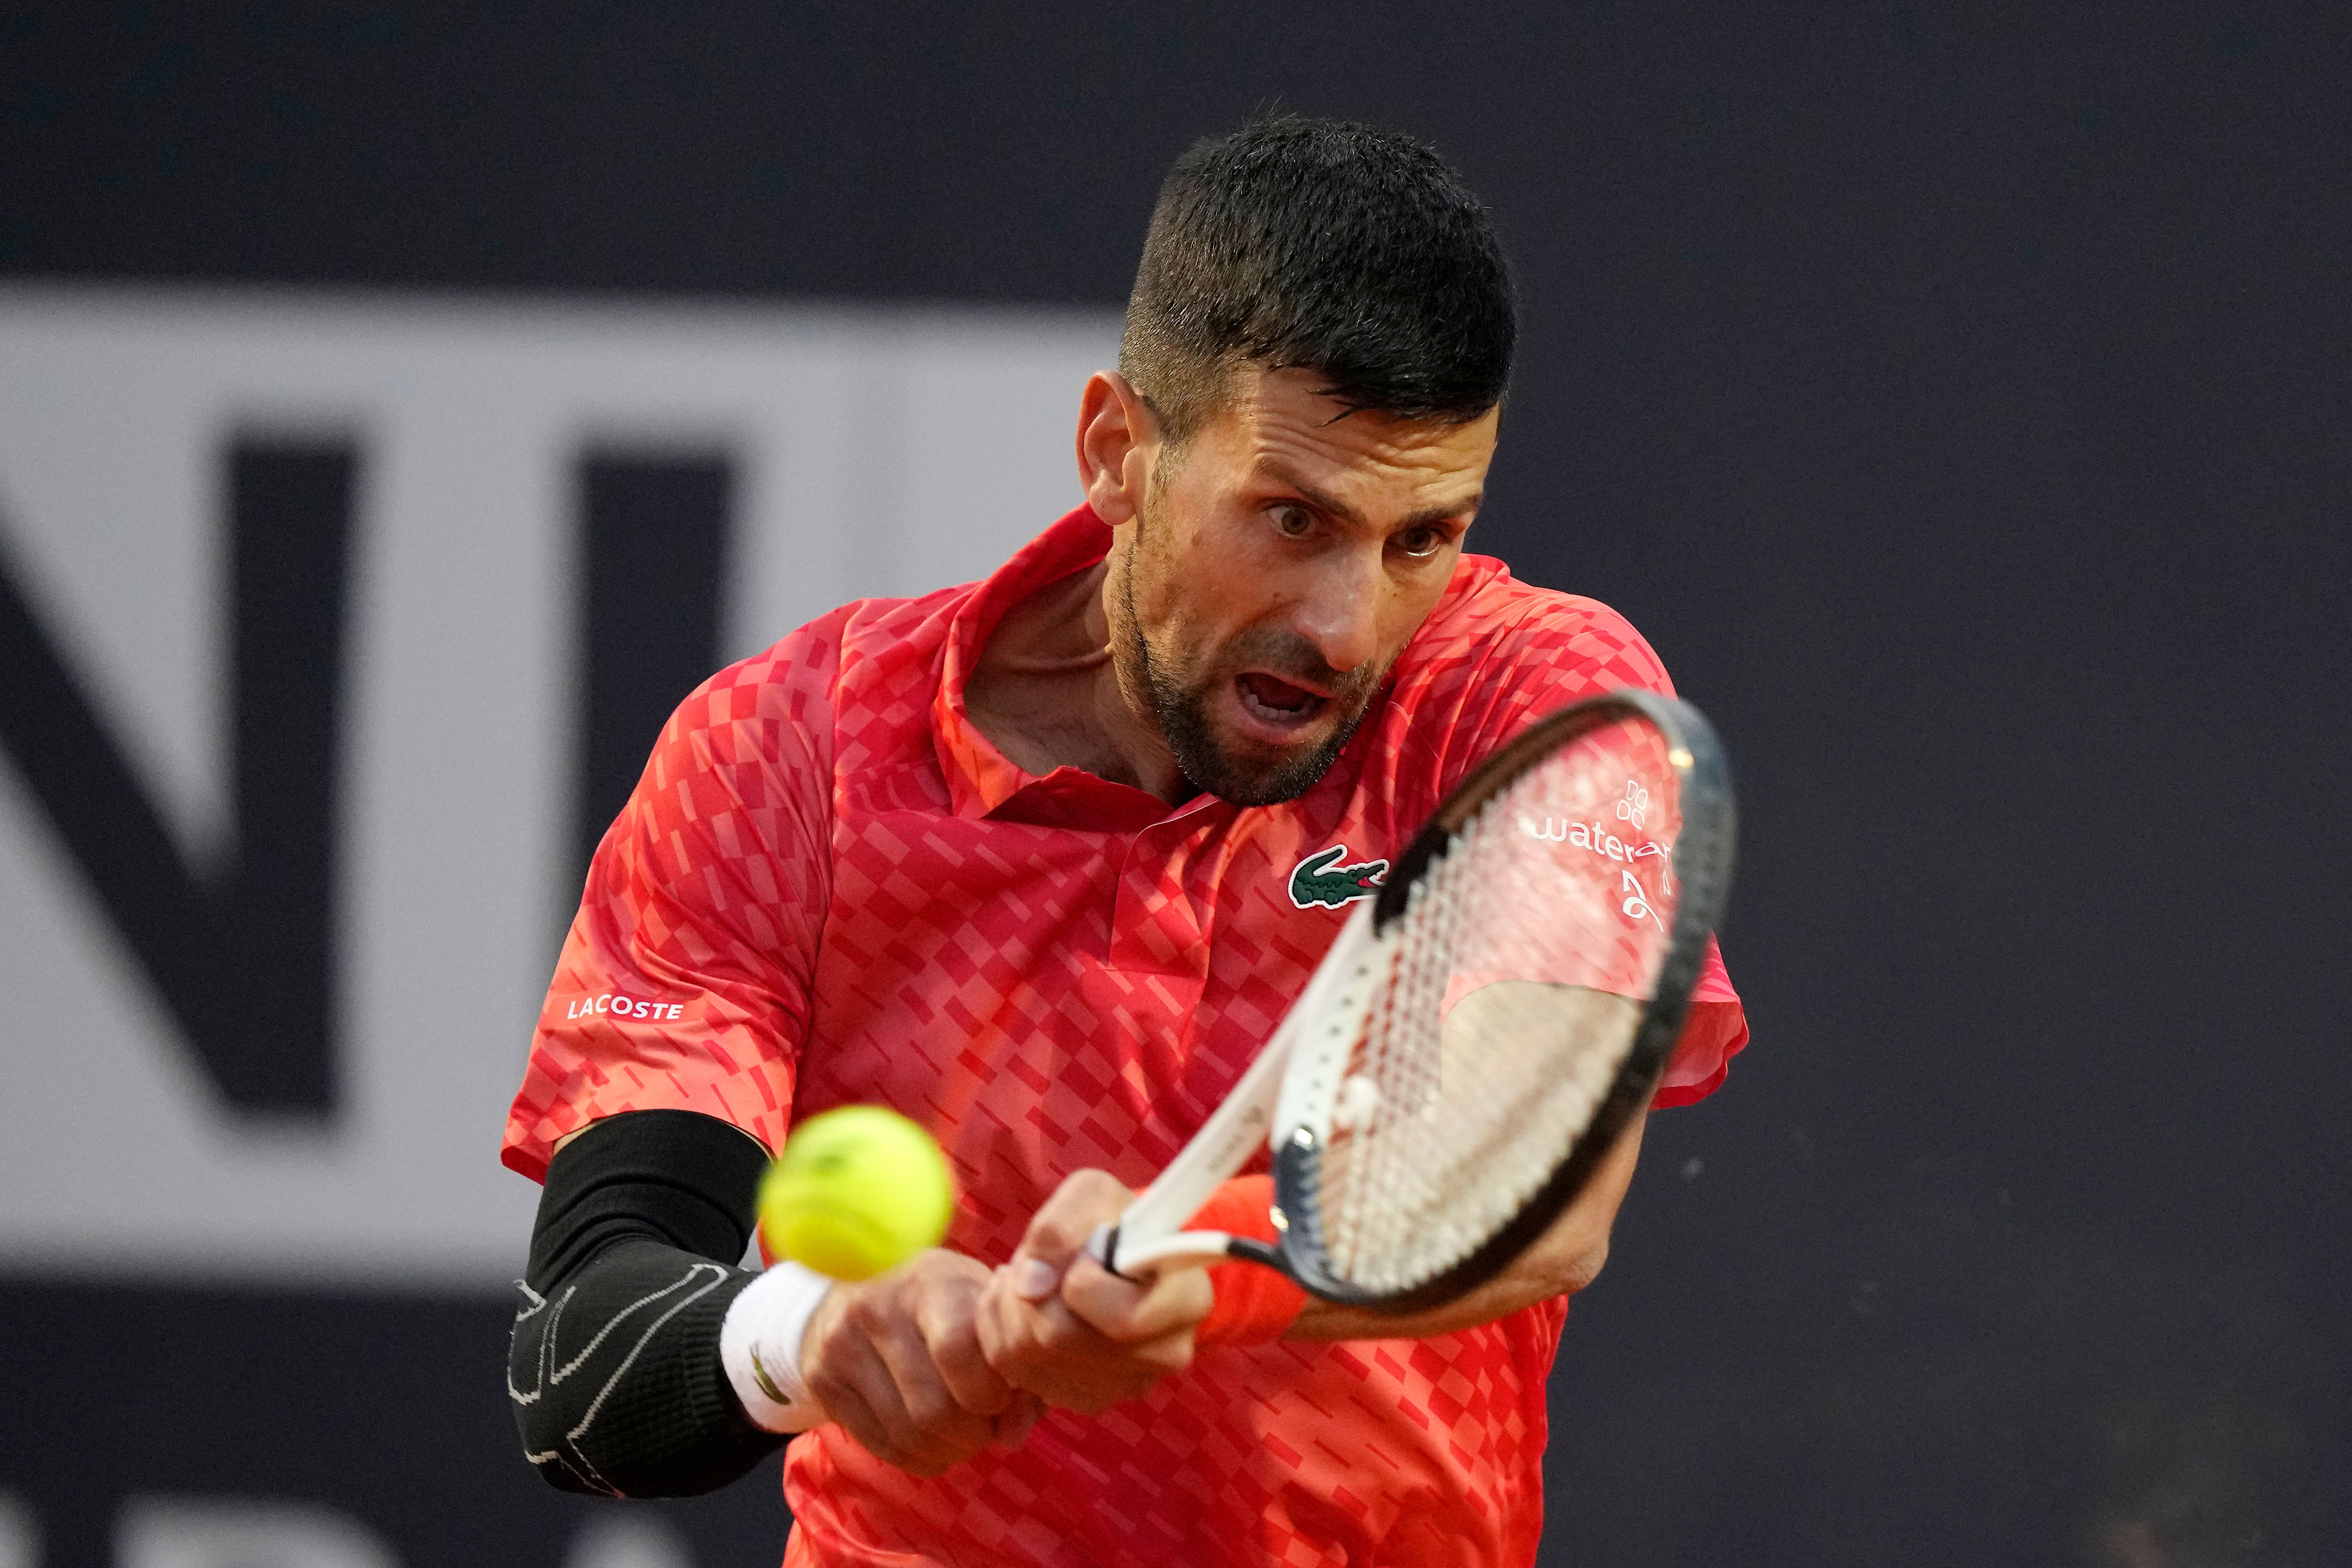 Novak Djokovic had strapping on his right elbow (Andrew Medichini/AP)